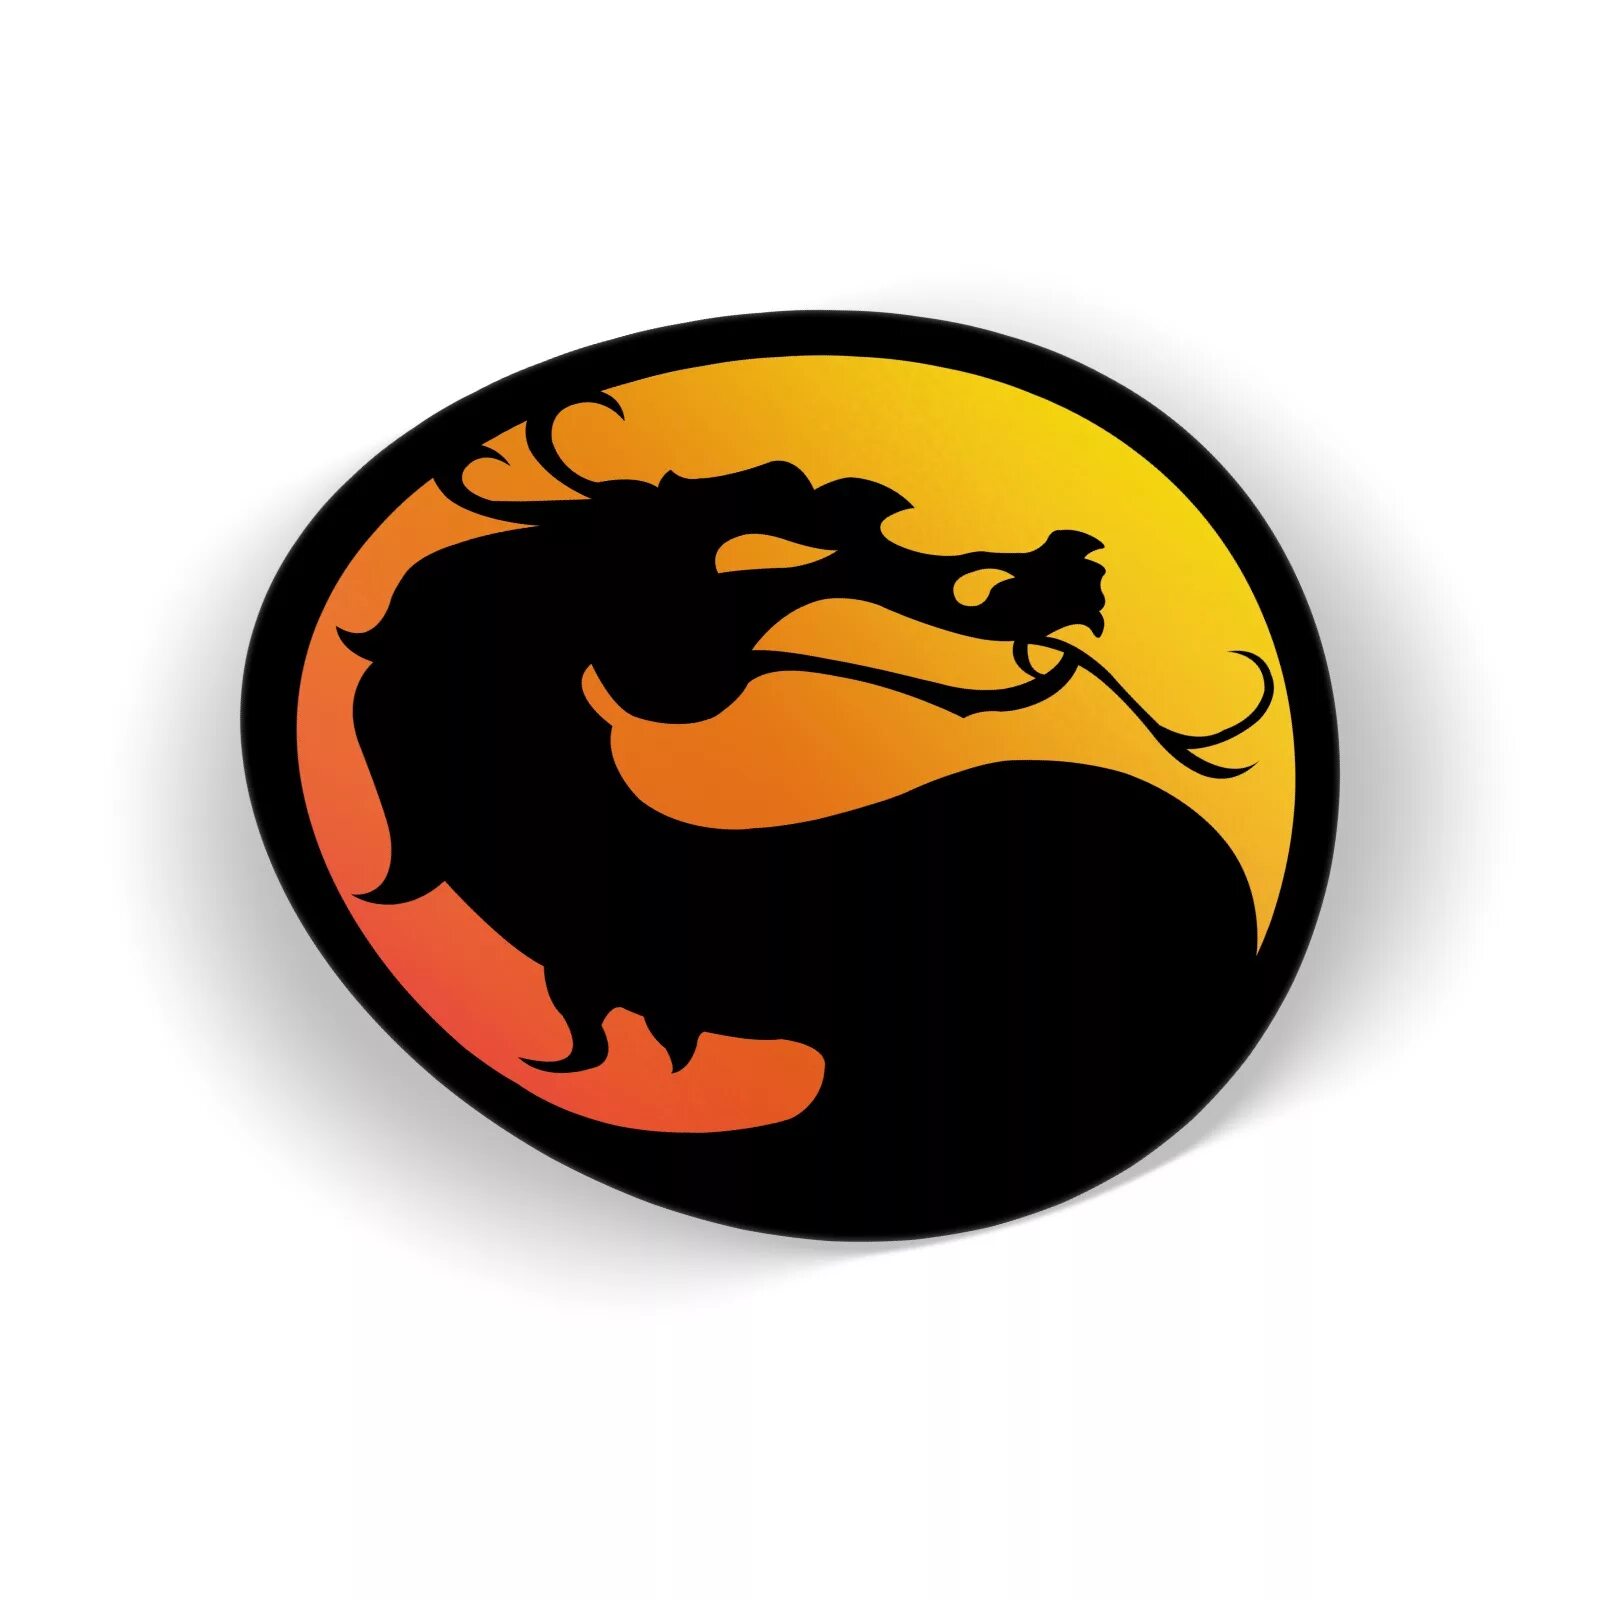 Mortal Kombat Stickers. Мортал комбат logo. Наклейки Mortal Kombat. Наклейки на авто мортал комбат. Наклейки мортал комбат